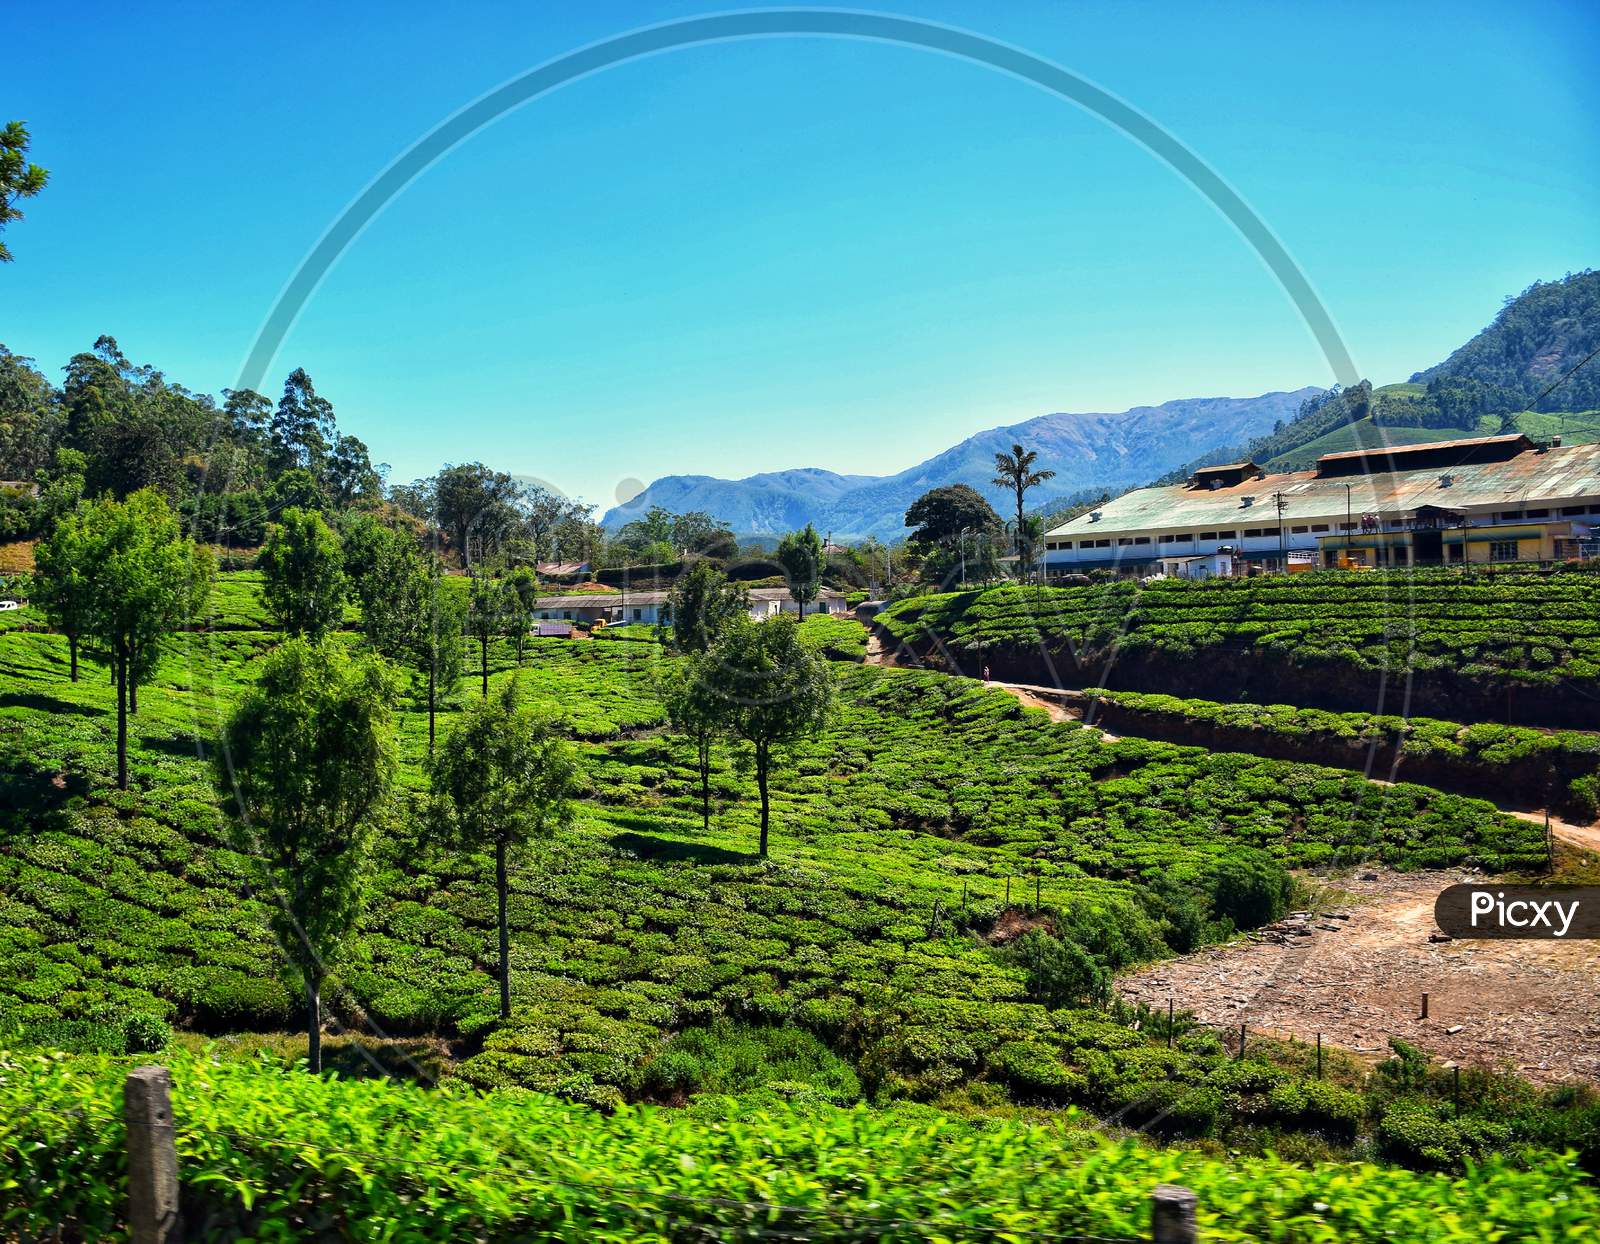 Greenery of Tea Plantation